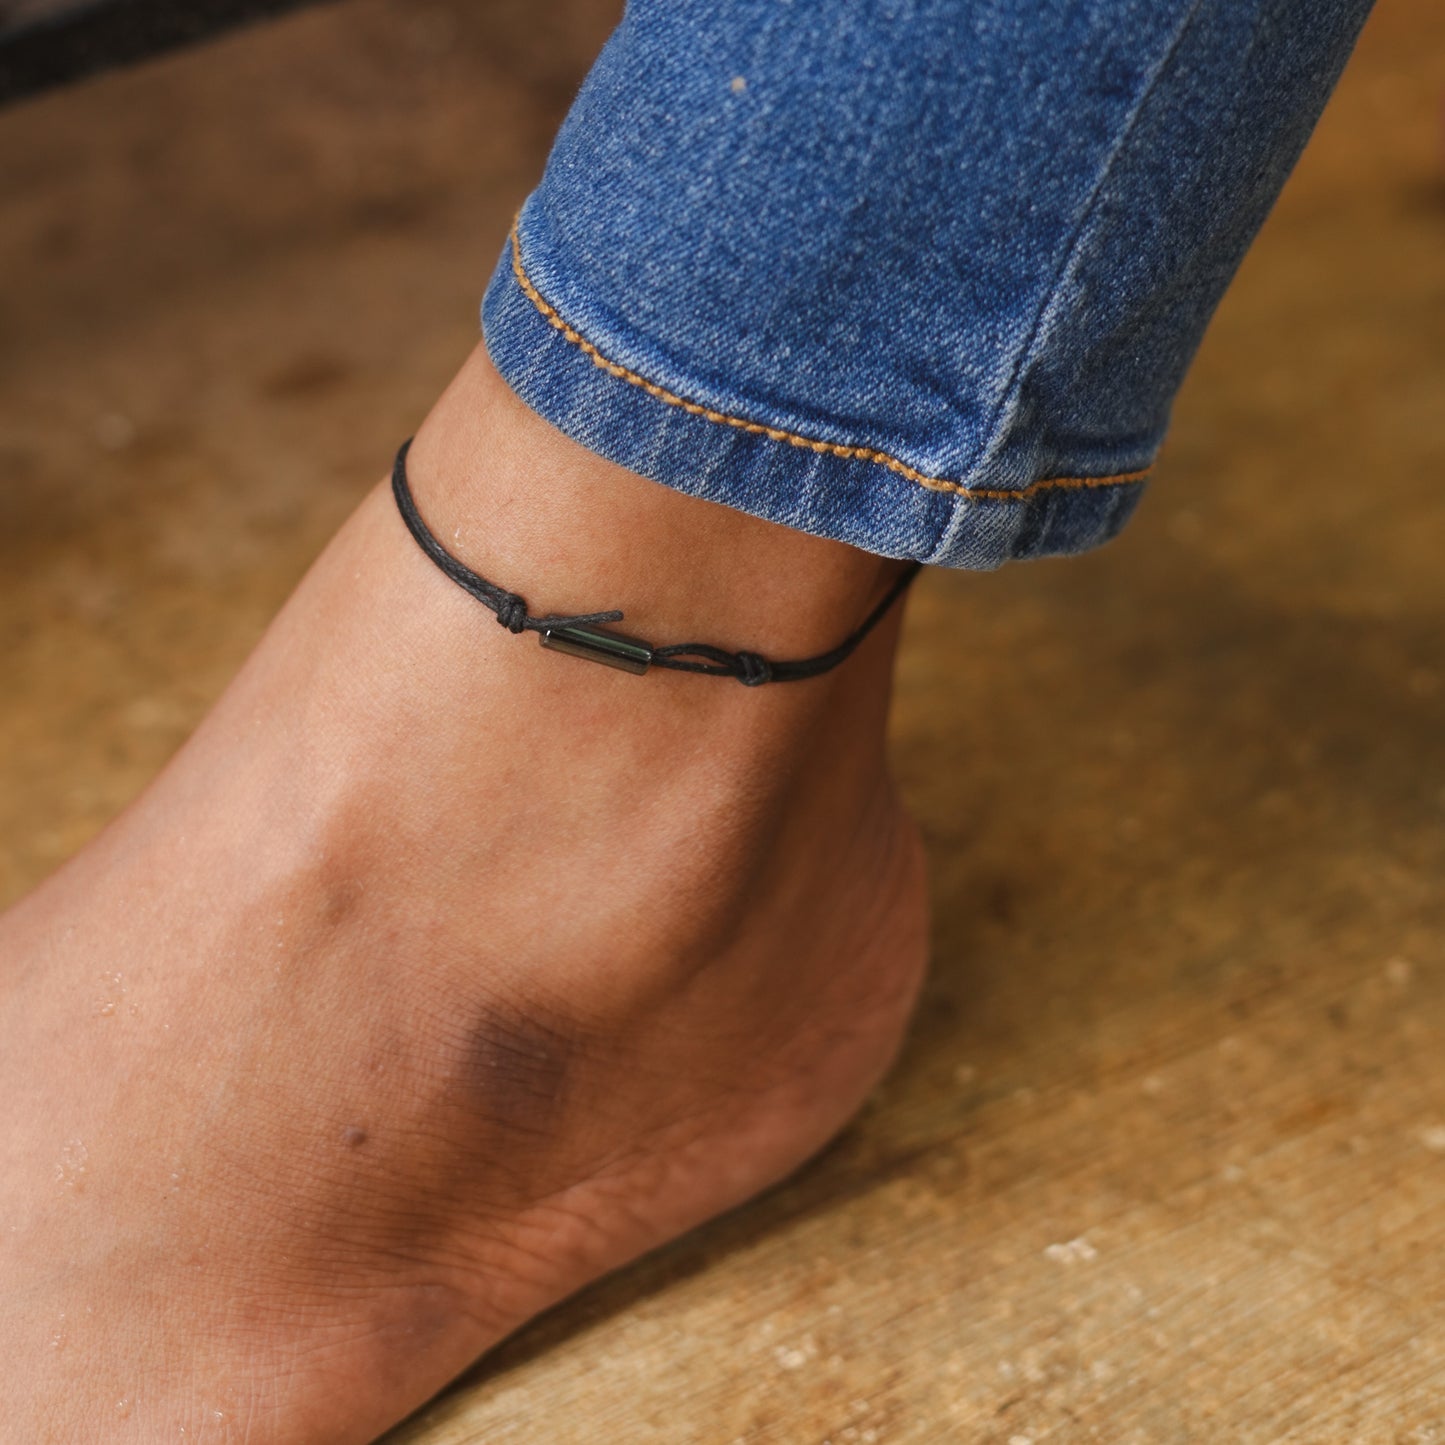 Hematite Bar Minimal and Adjustable anklet